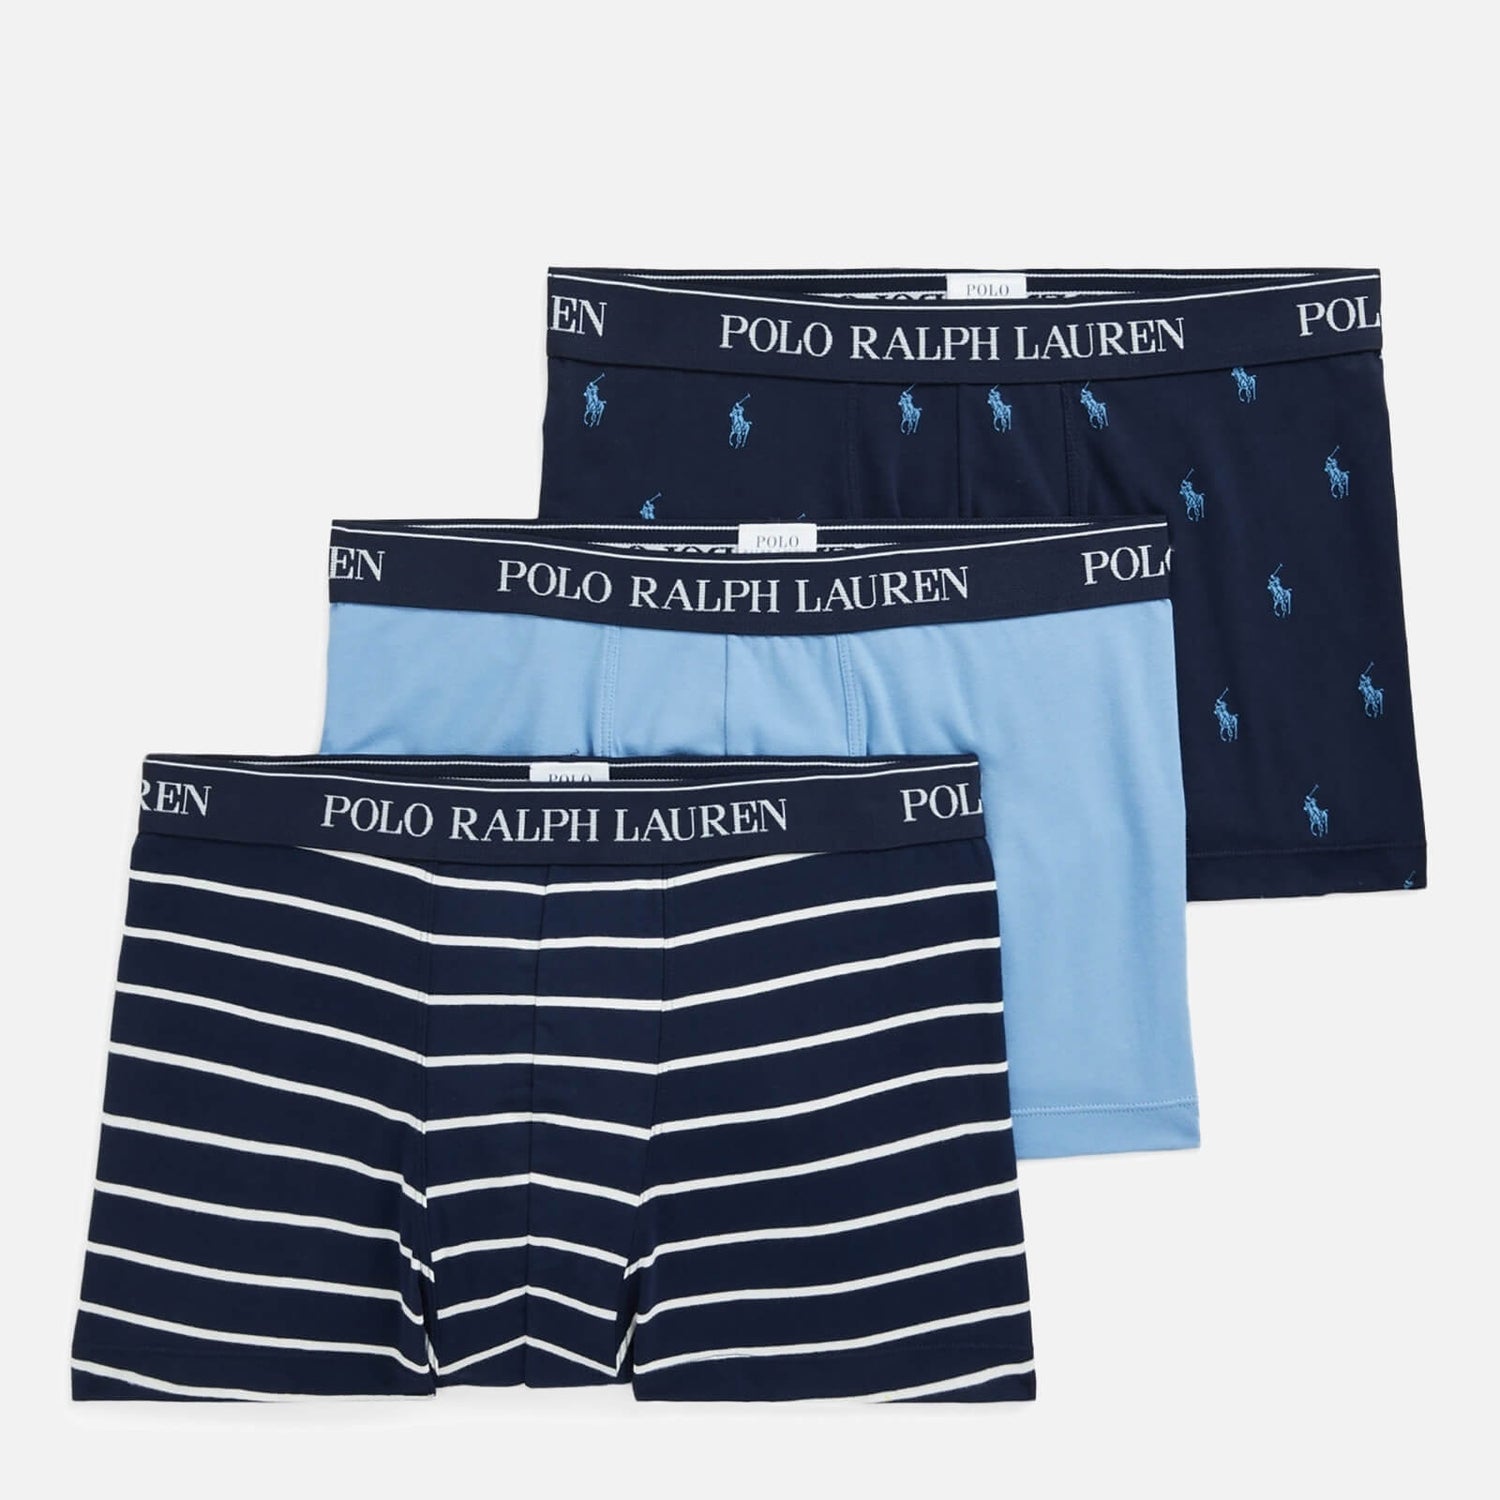 Polo Ralph Lauren Men's 3-Pack Classic Trunk Boxer Shorts - Navy AOP/Sky/Navy Stripe - S